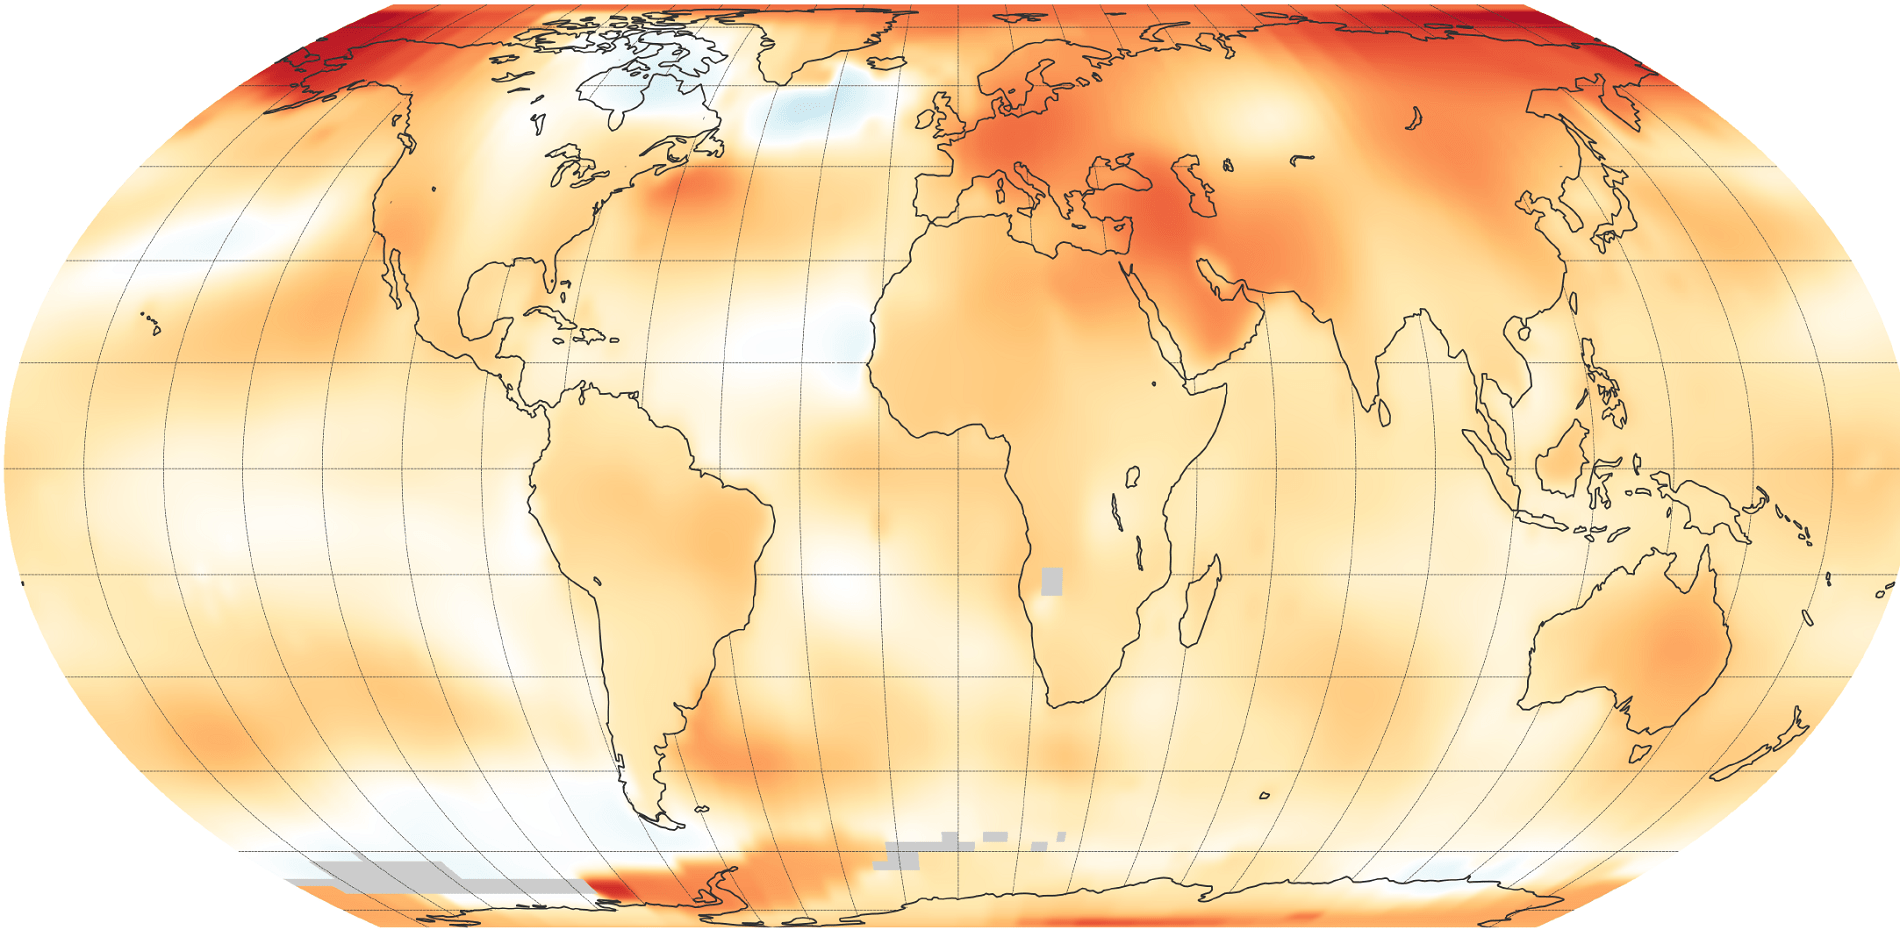 NASA and NOAA 2018 global temperature data